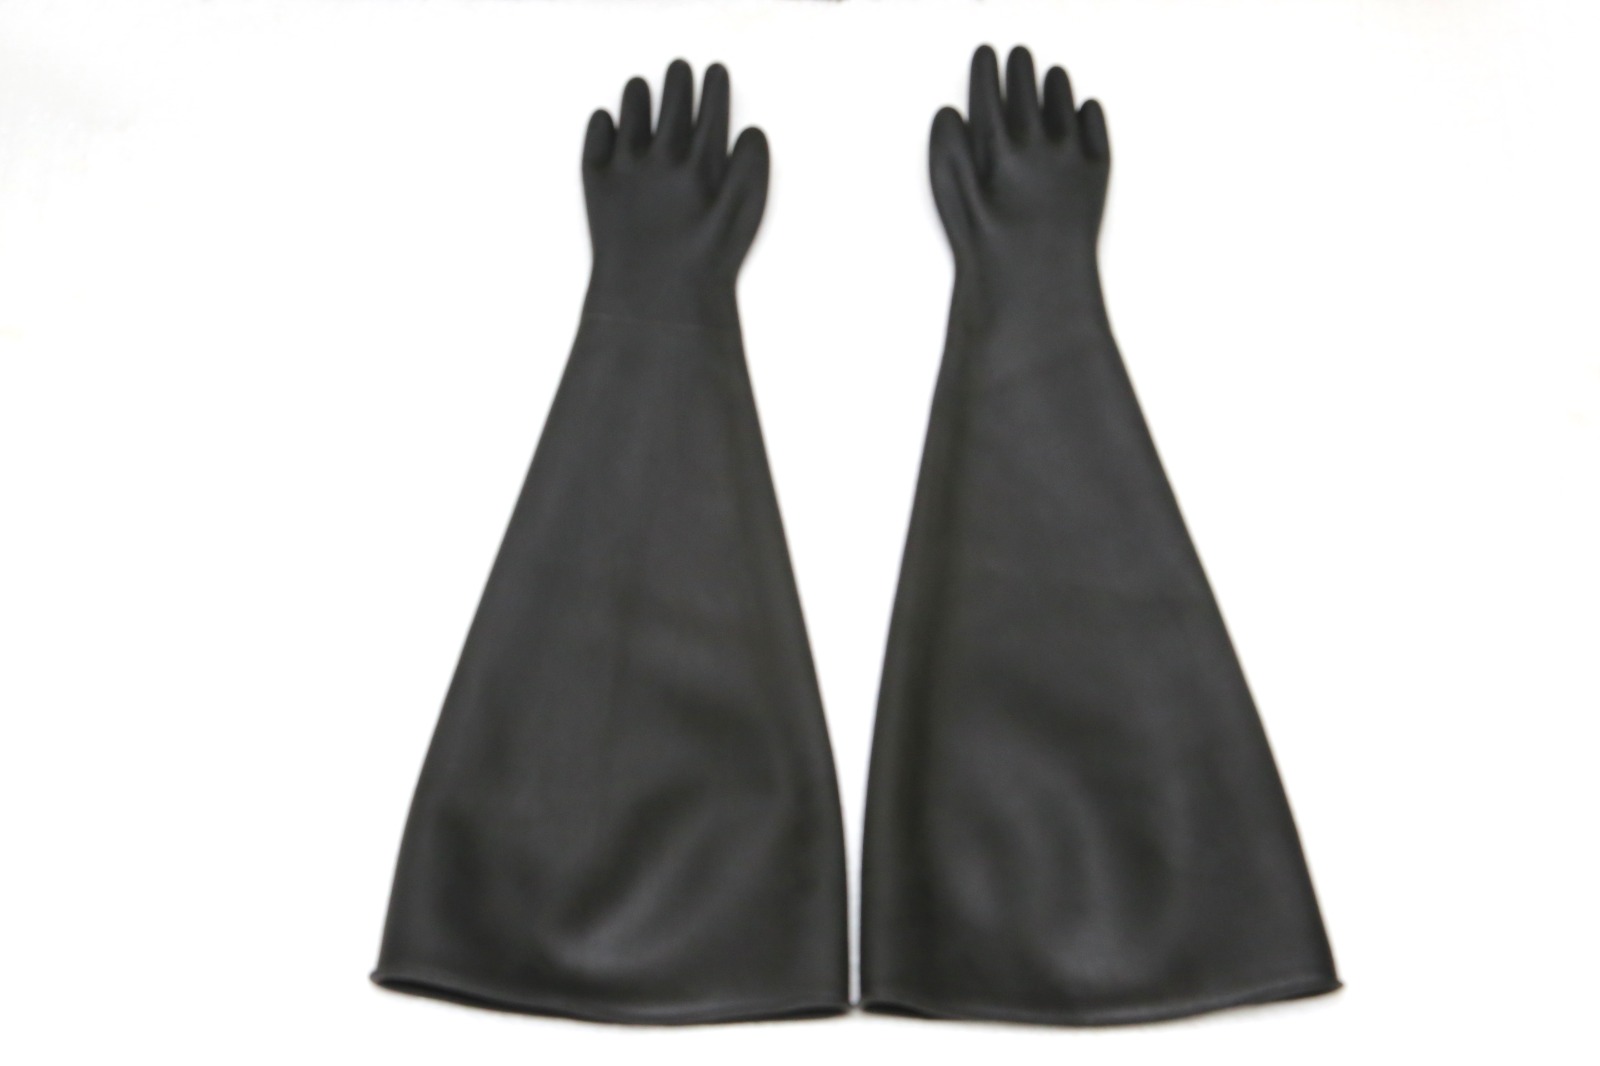 Zero Cabinet Gloves Supplier and Dealer in Dubai UAE